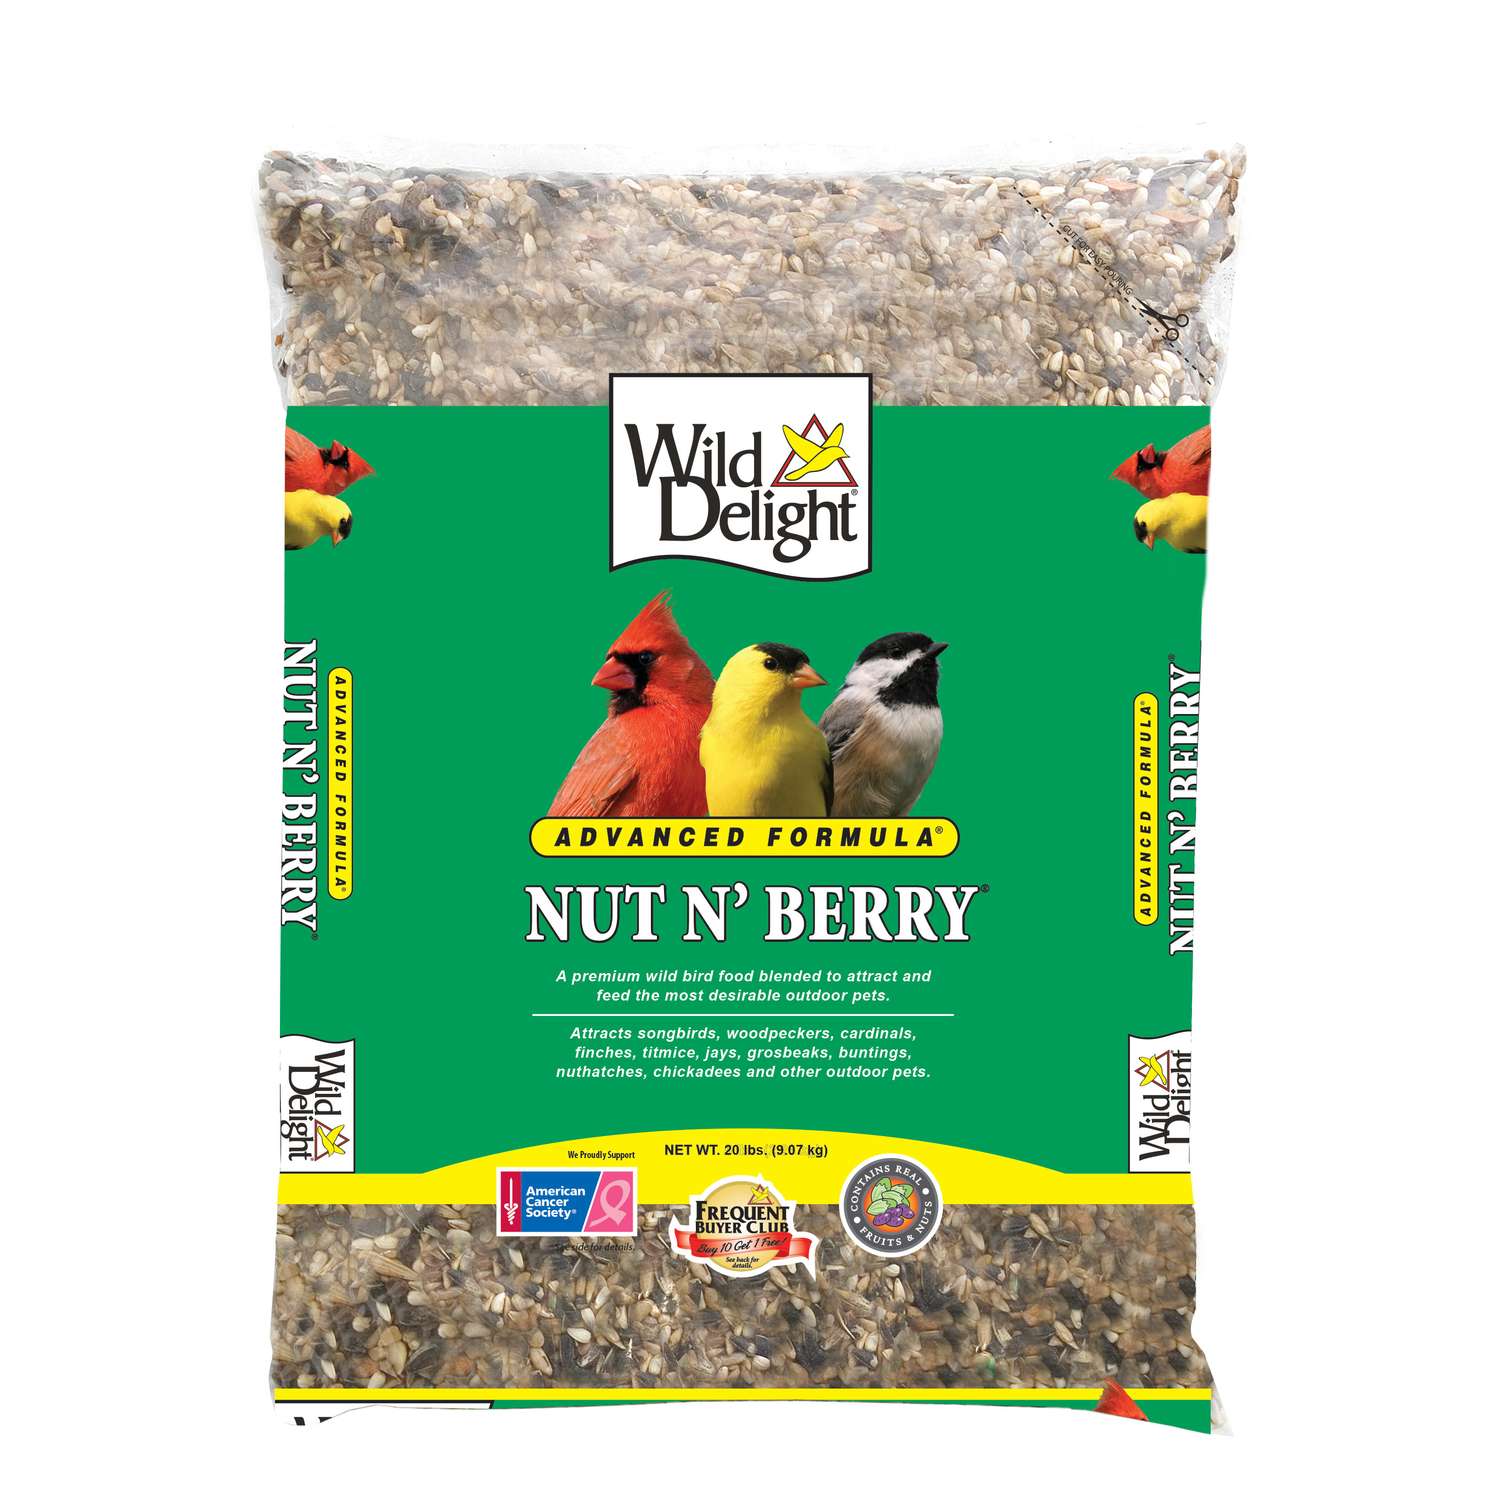 Wild Delight Nut N Berry Assorted Species Sunflower Kernels Wild Bird Food Lb Ace Hardware